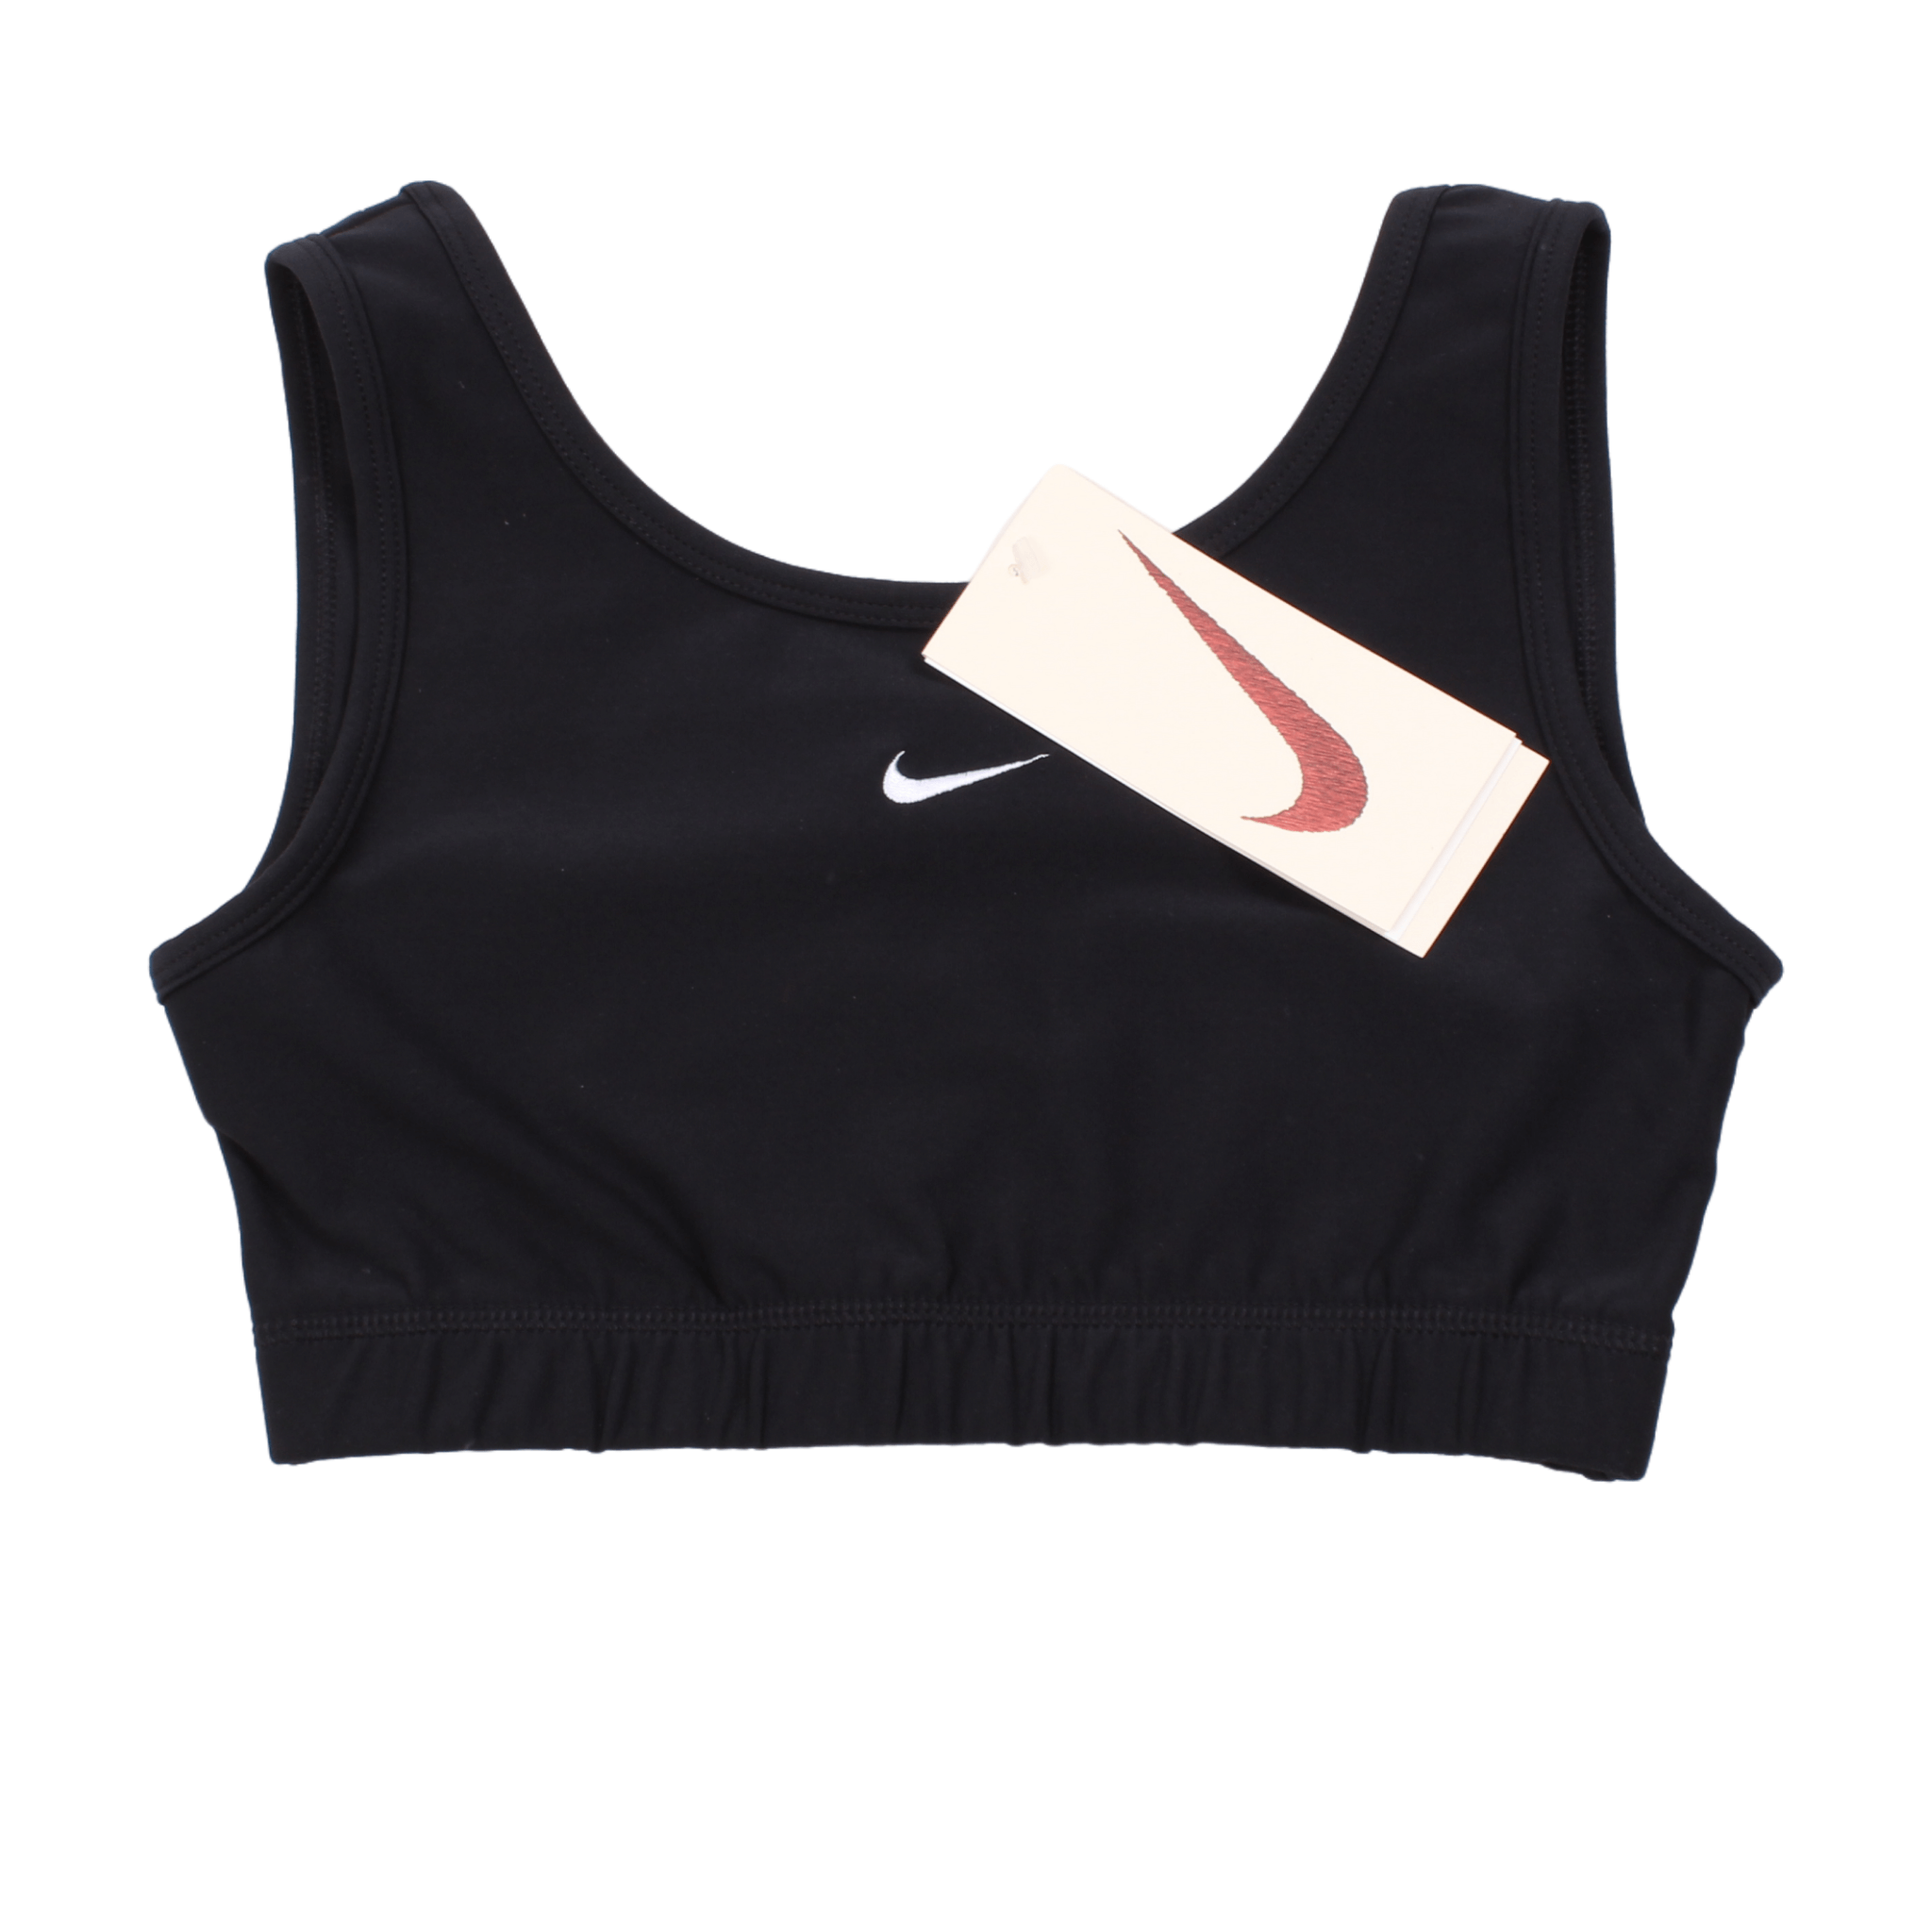 Vintage Nike sports bra